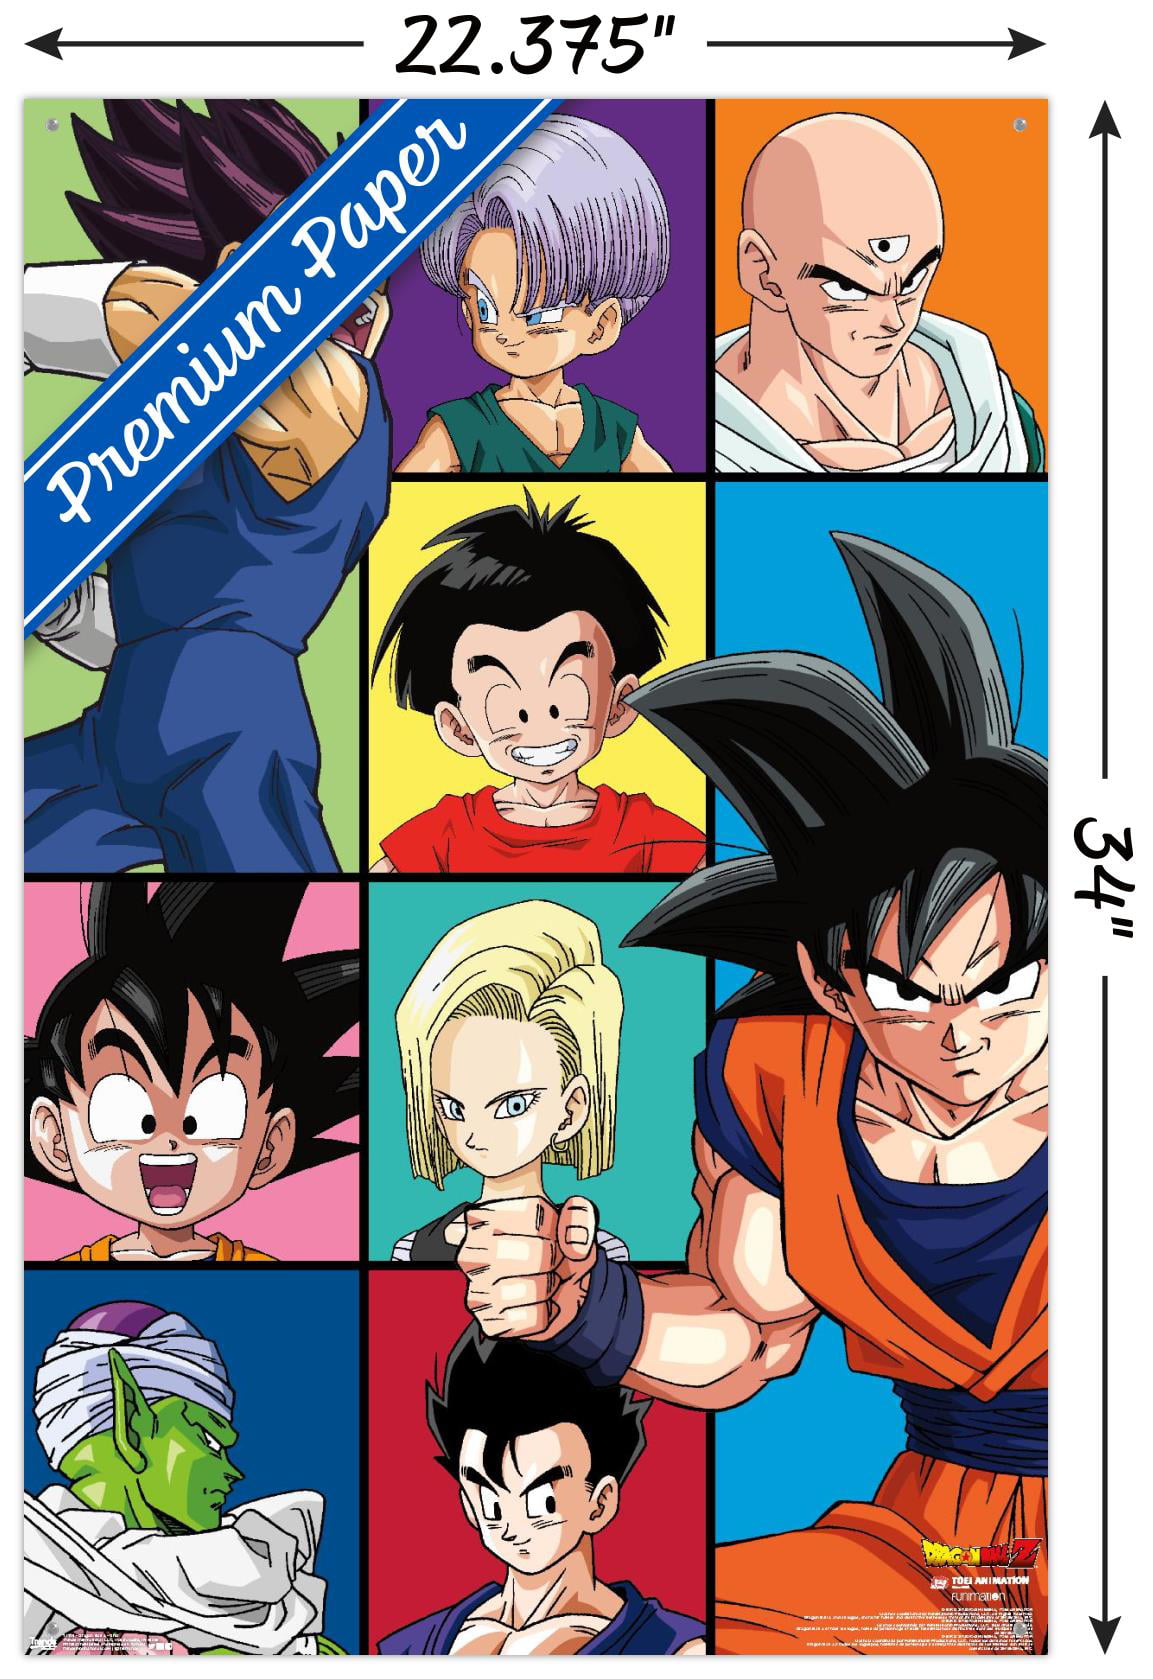 Dragon Ball Z - Saiyans Wall Poster with Magnetic Frame, 22.375 x 34 